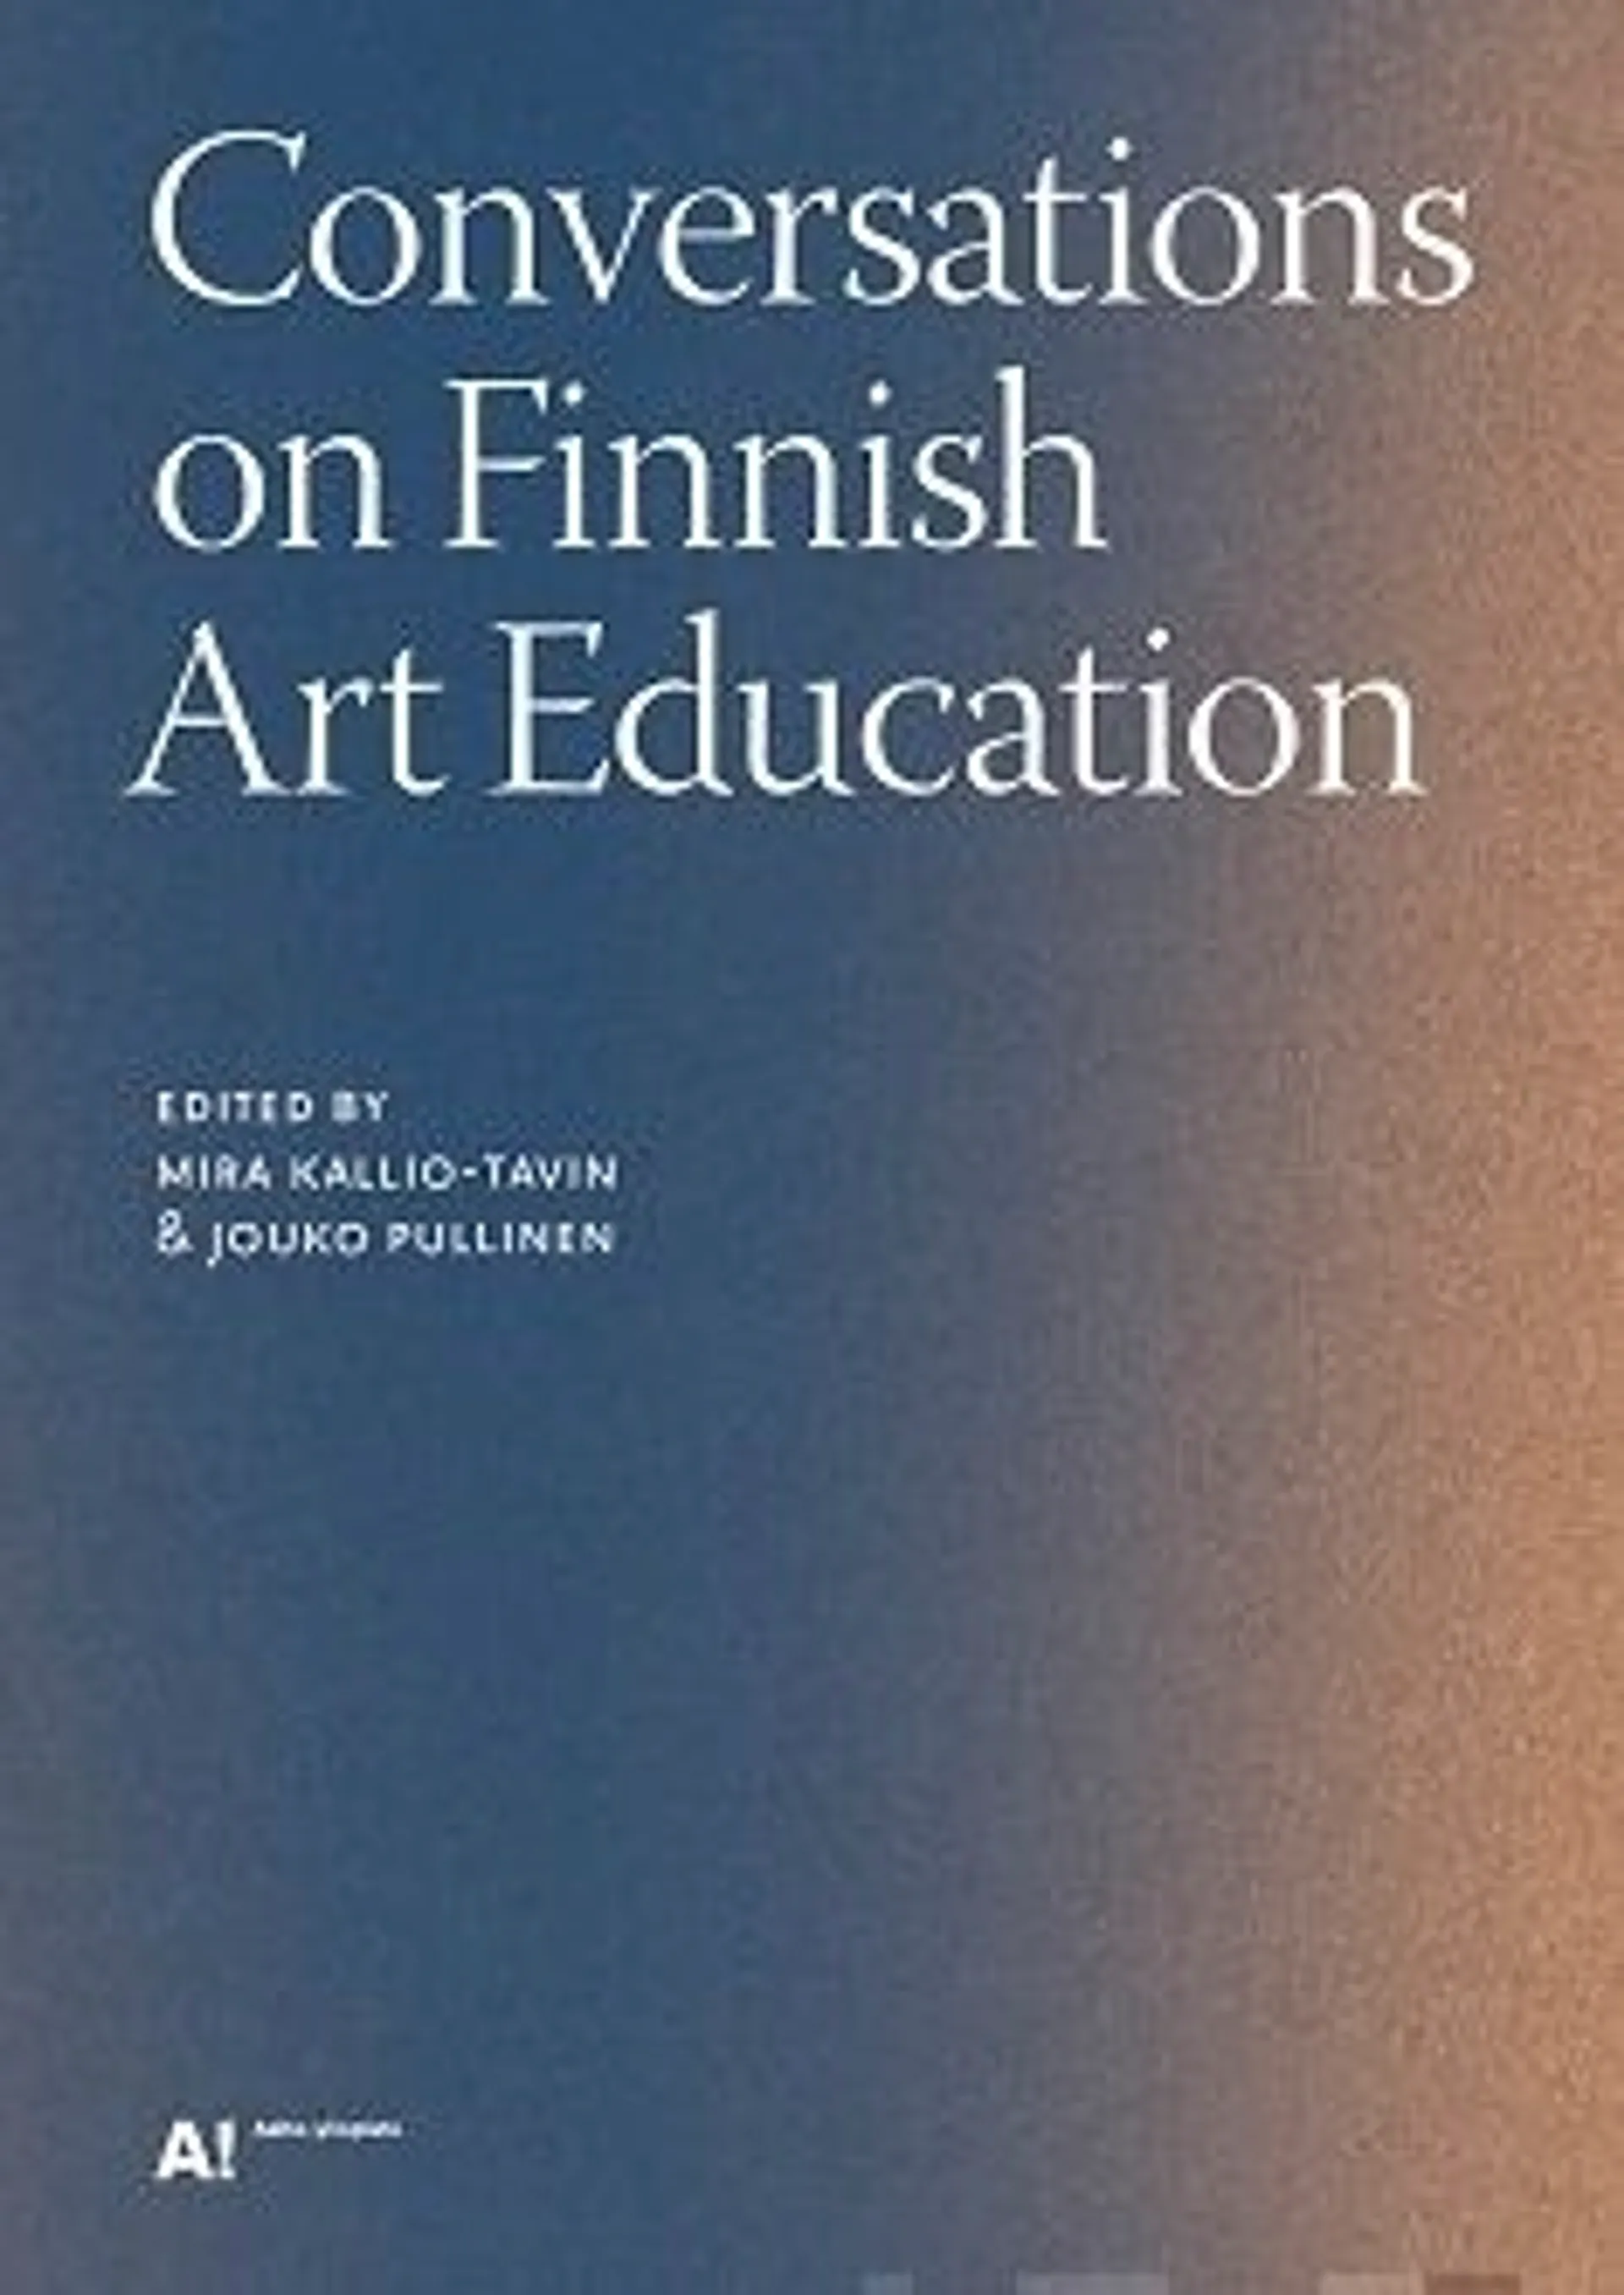 Conversations on Finnish Art Education